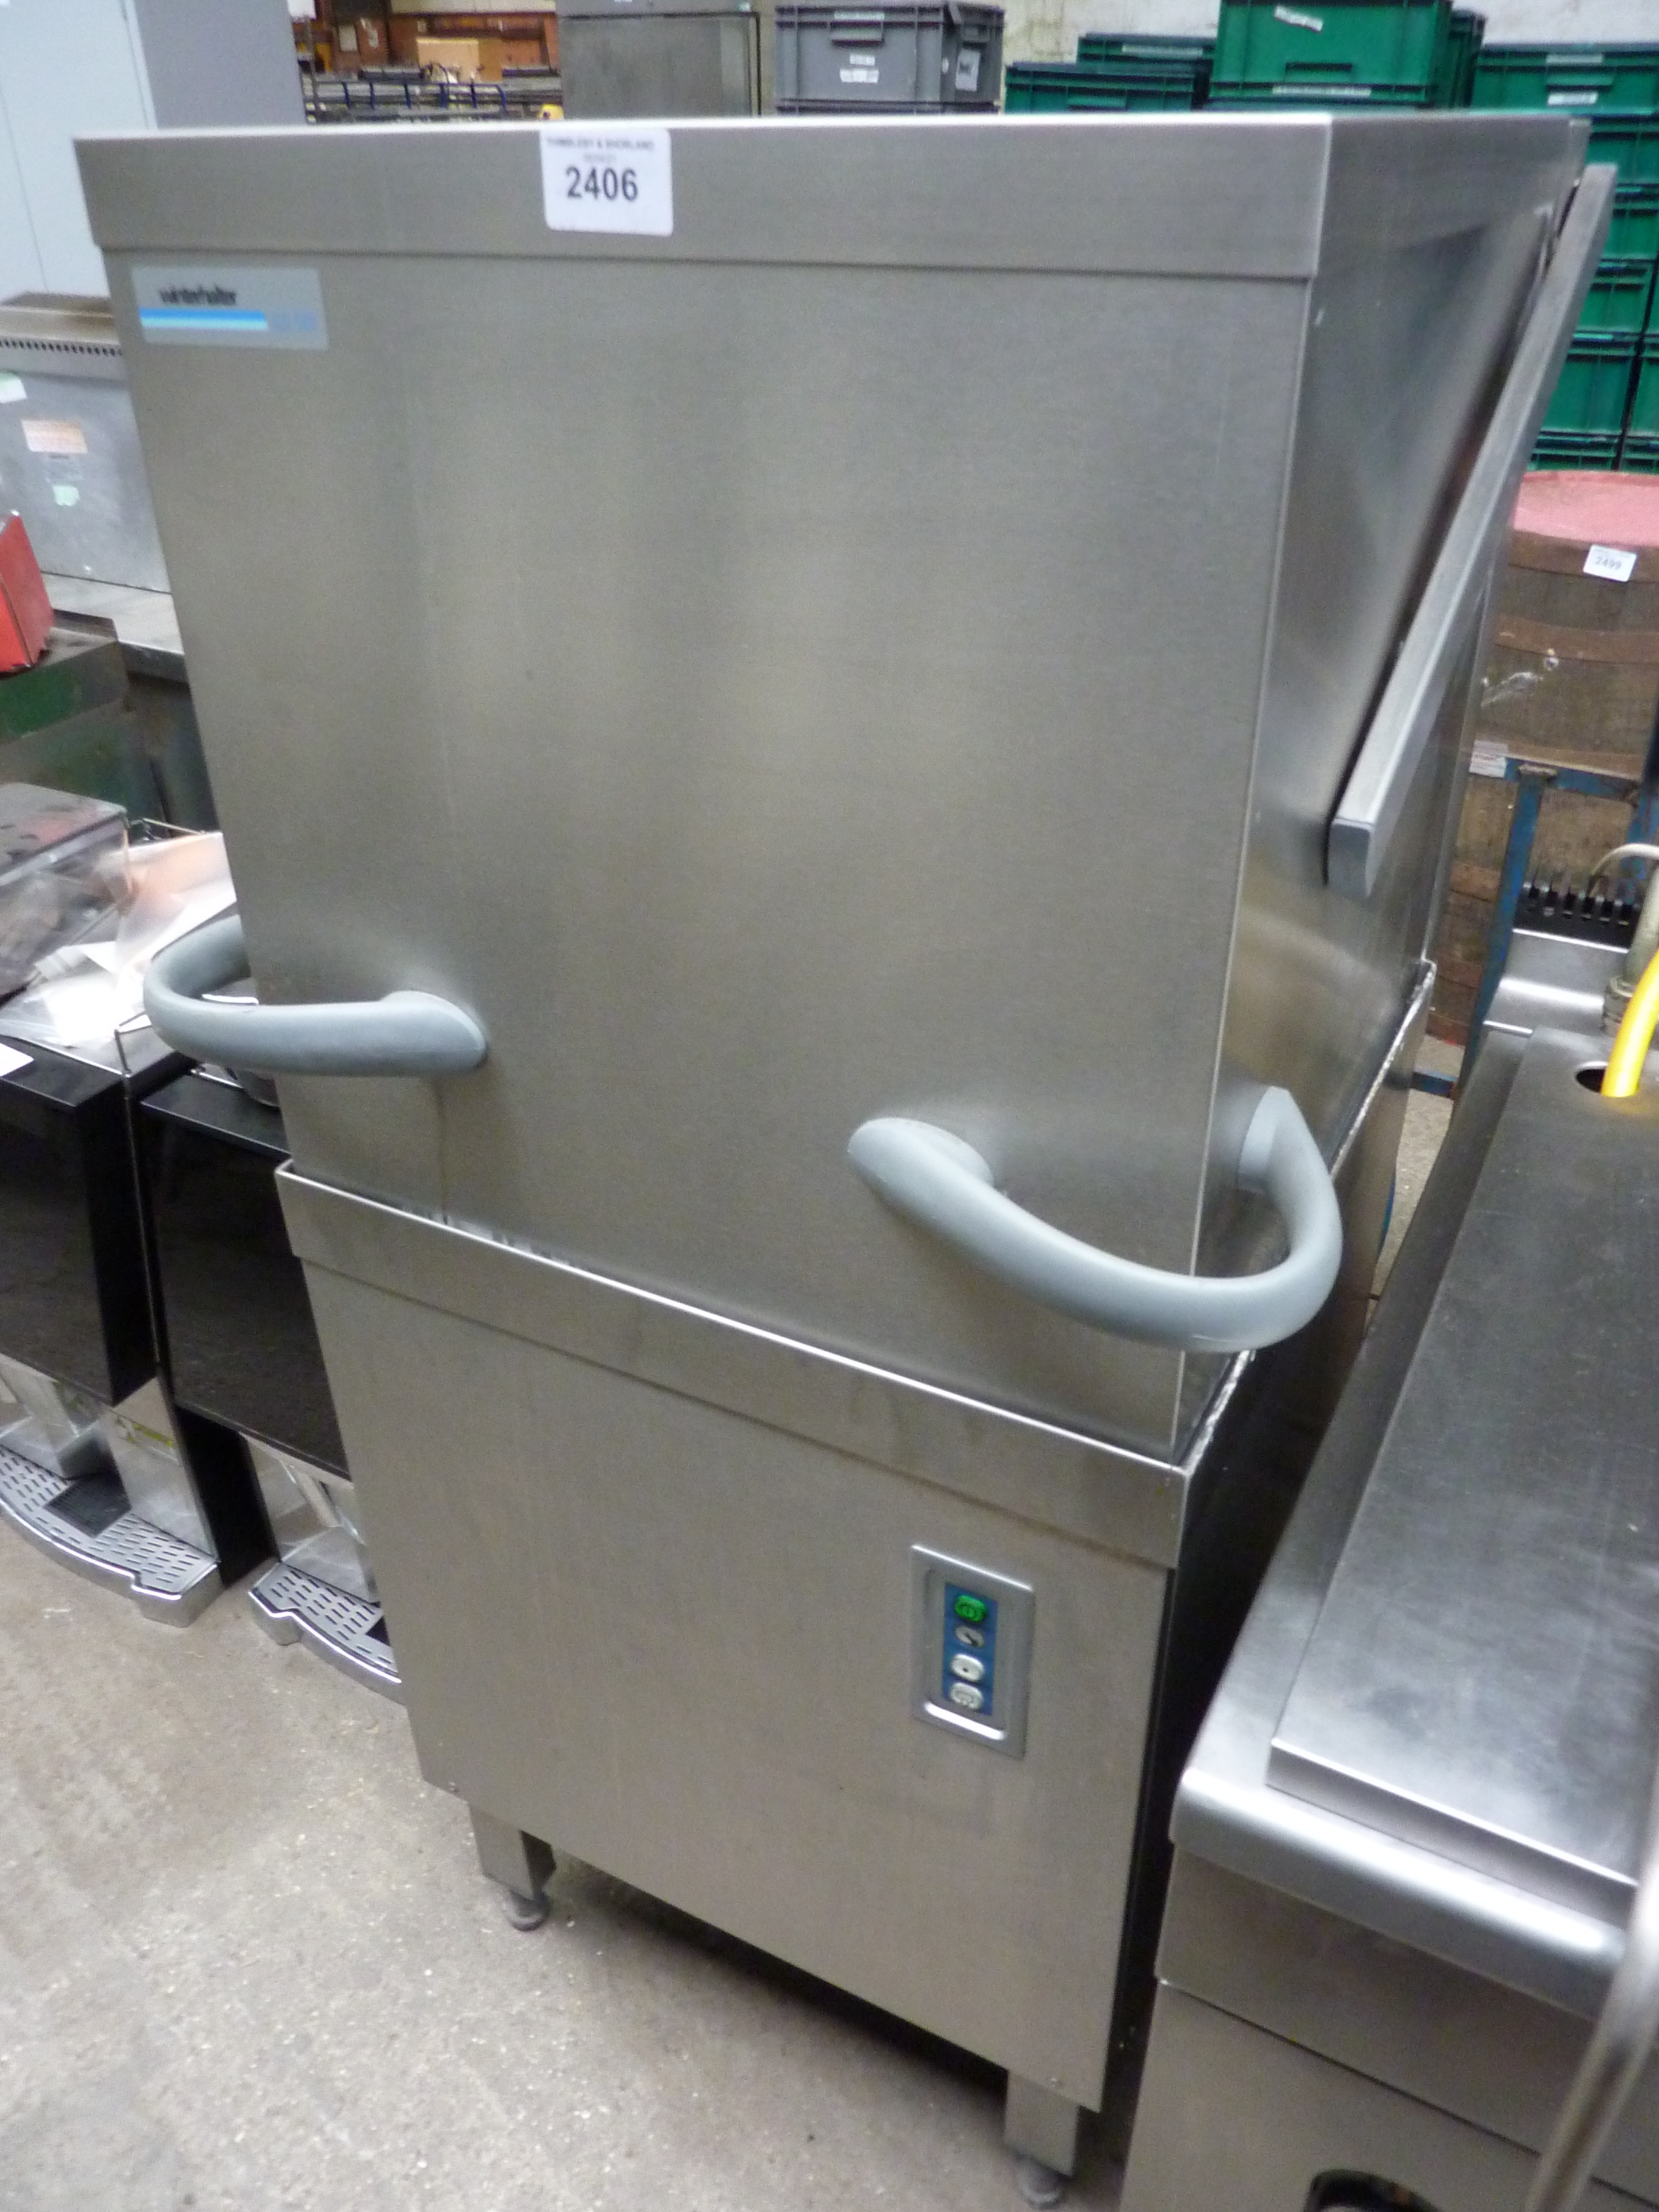 Winterhalter GS501 pass through commercial dishwasher